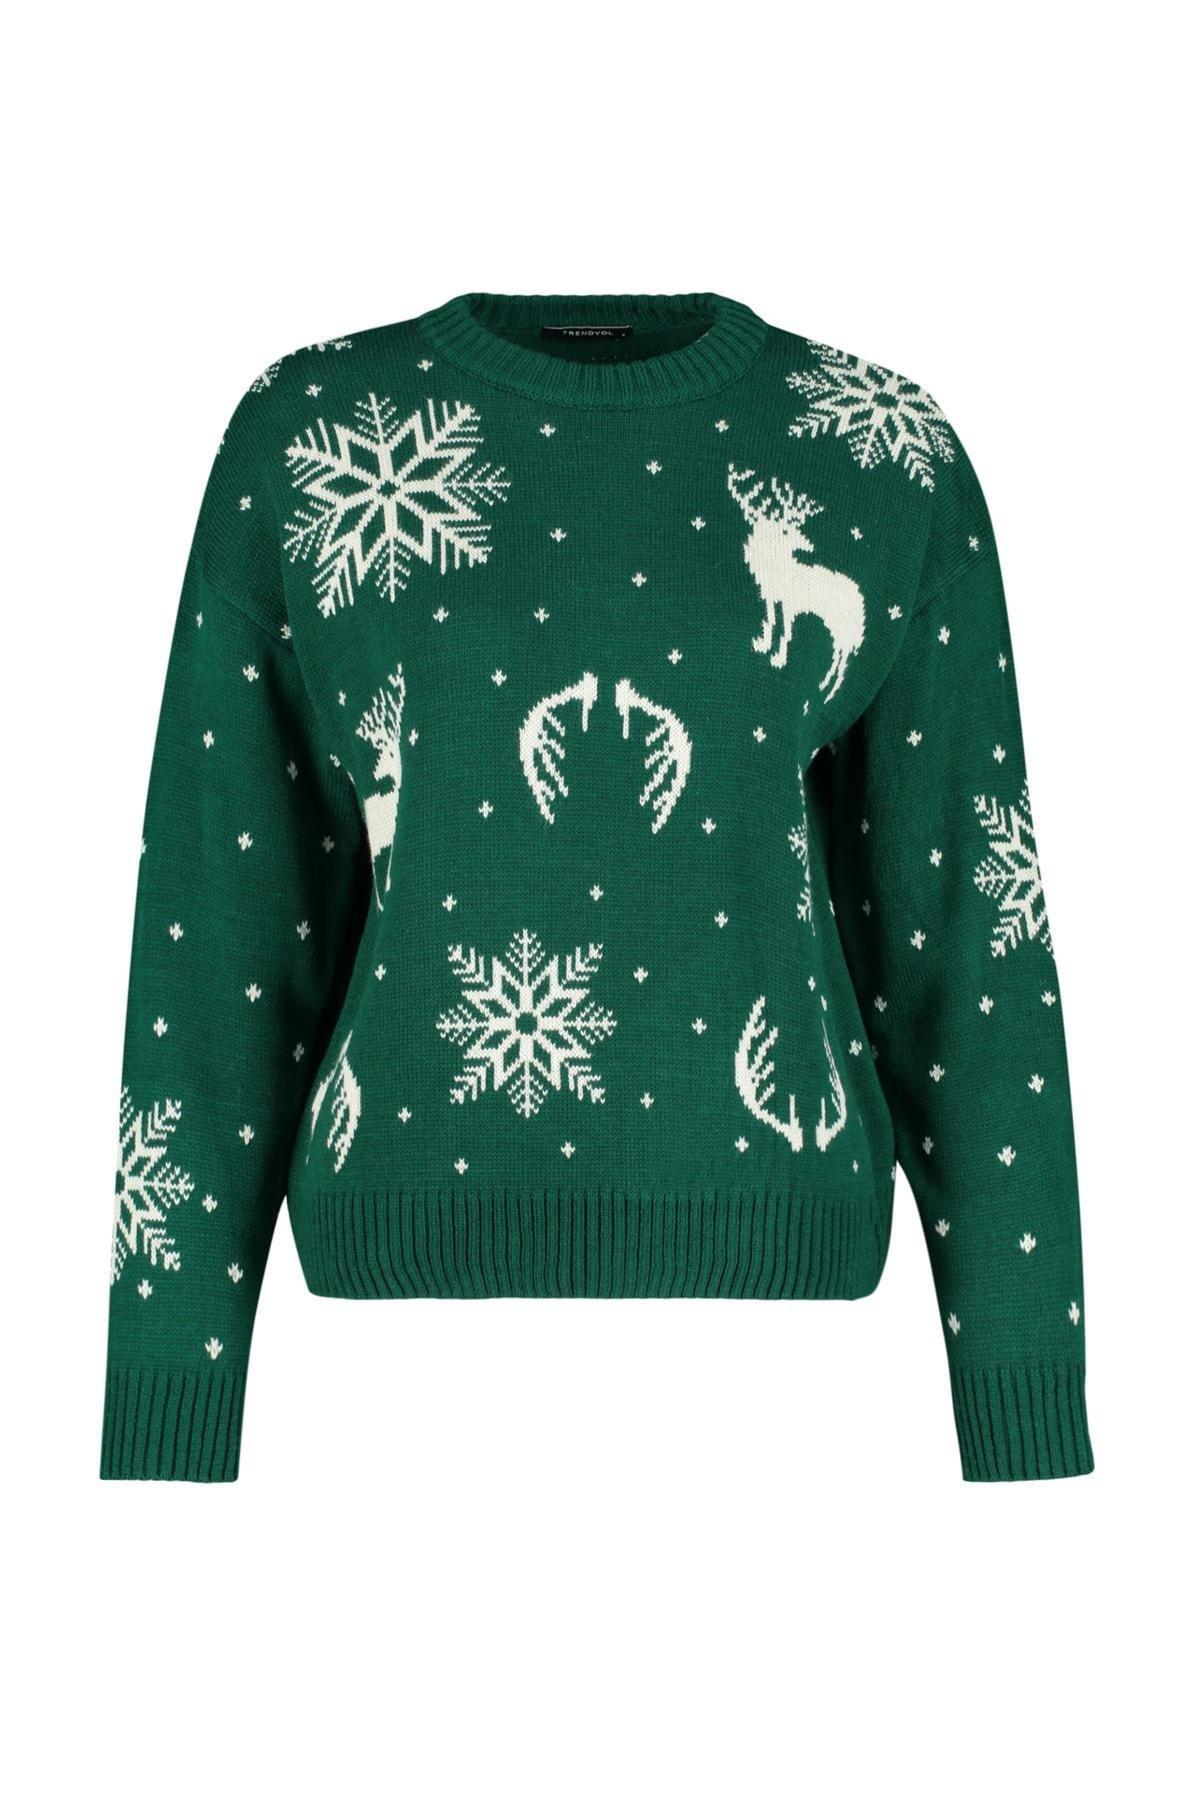 Trendyol - Green Christmas Sweater